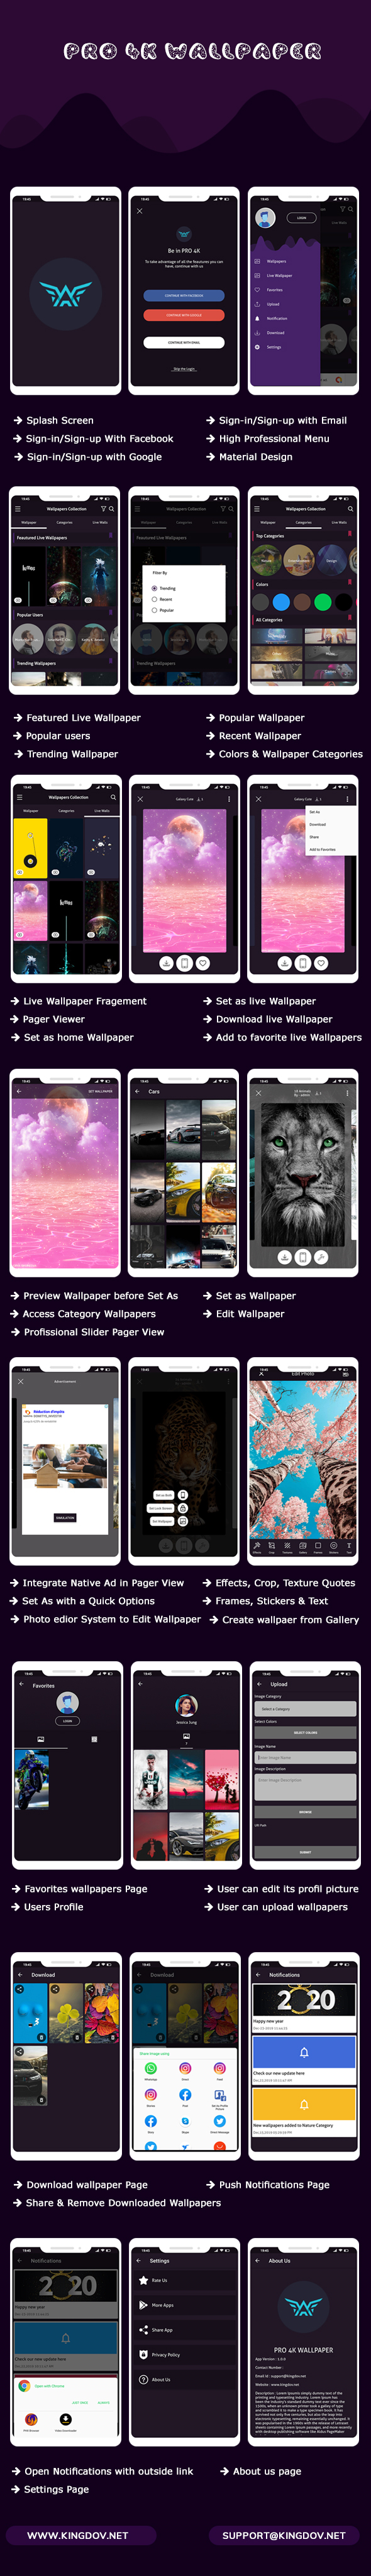 Pro 4K Wallpaper 2020 & Photo Editor System - AdMob & Facebook Ads & Push Notifications - 2